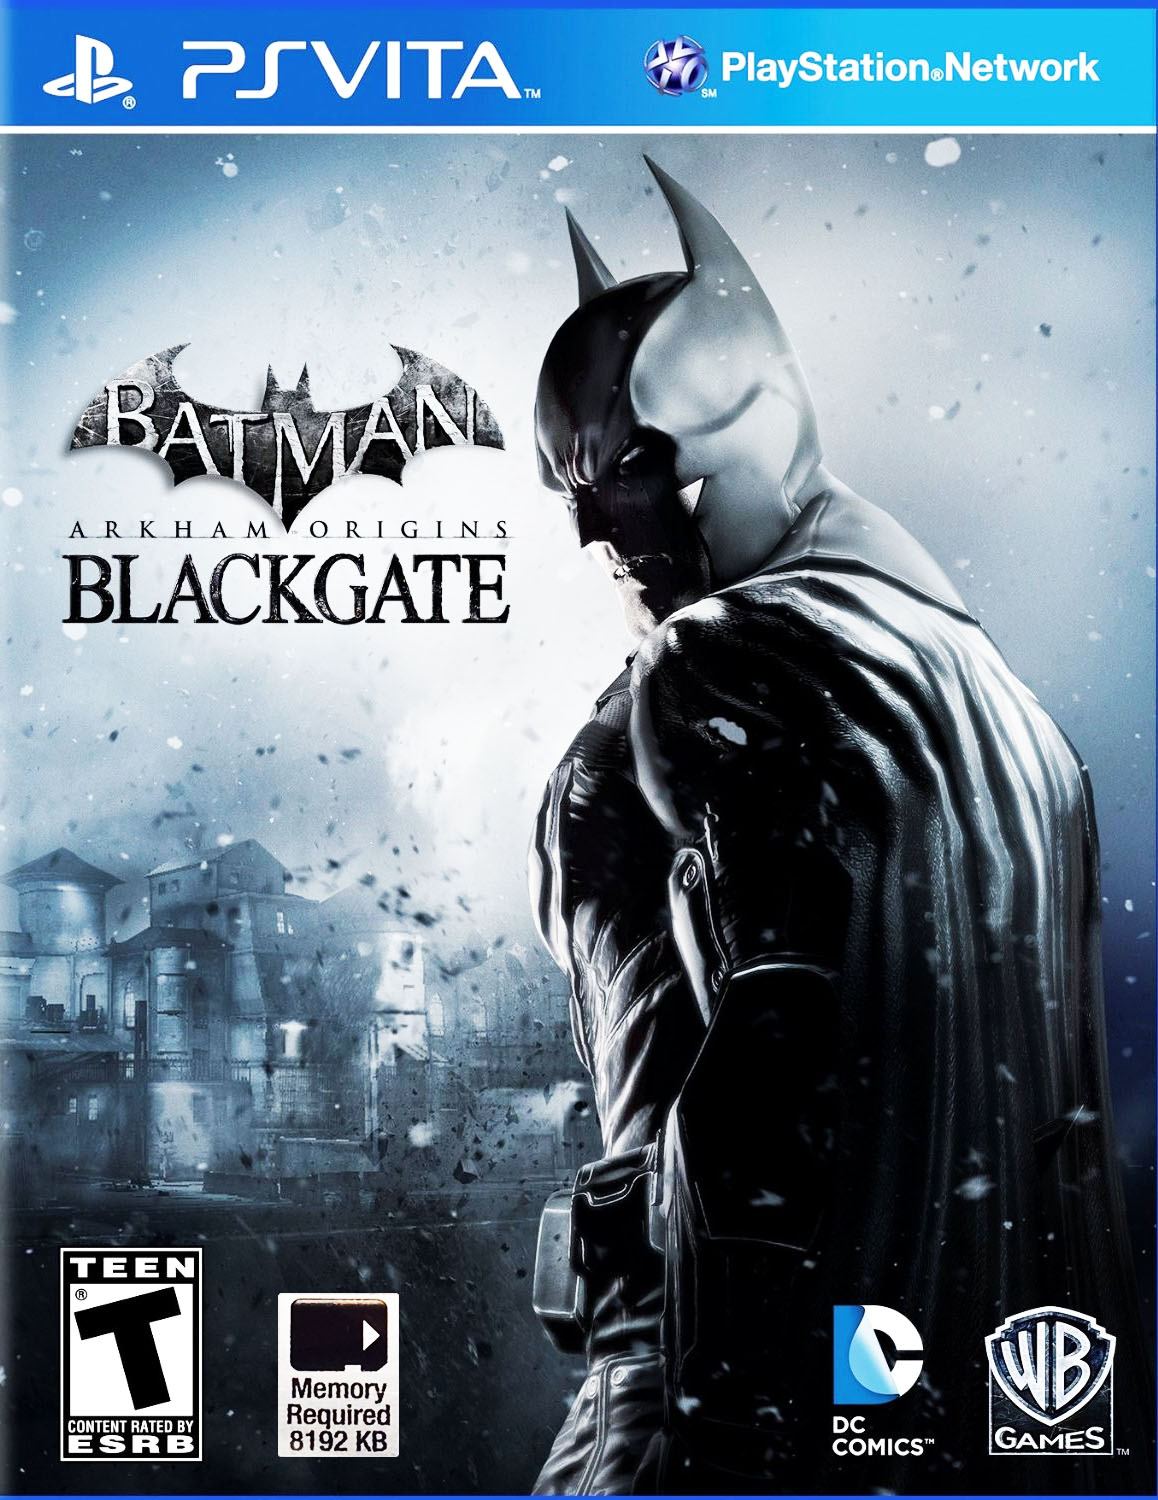 Batman: Arkham Origins Blackgate for PlayStation Vita